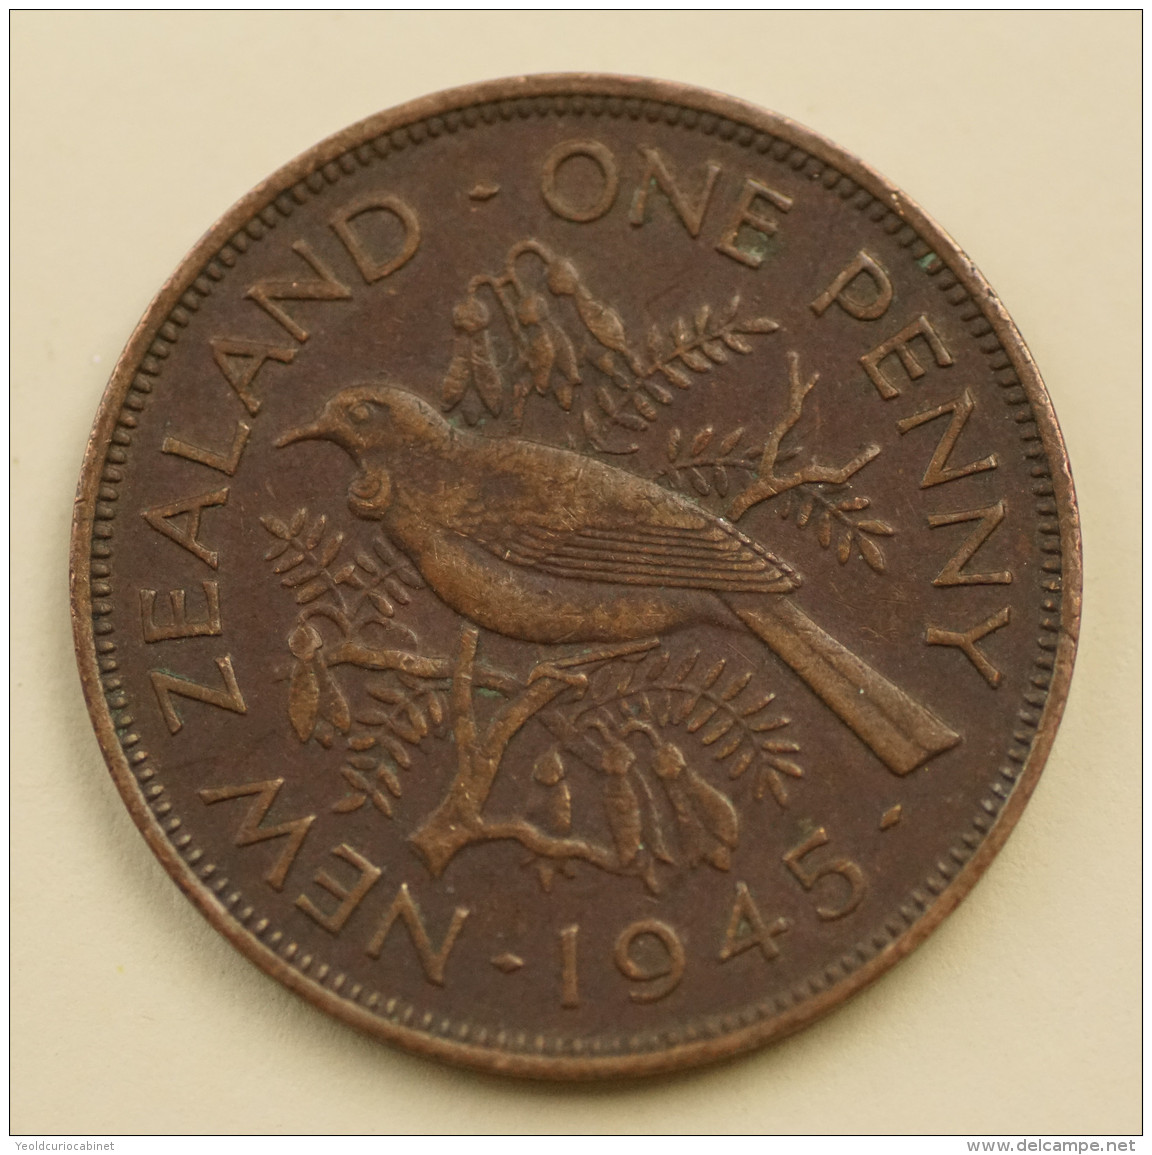 New Zealand - Penny - 1945 - George VI - Very Fine - New Zealand